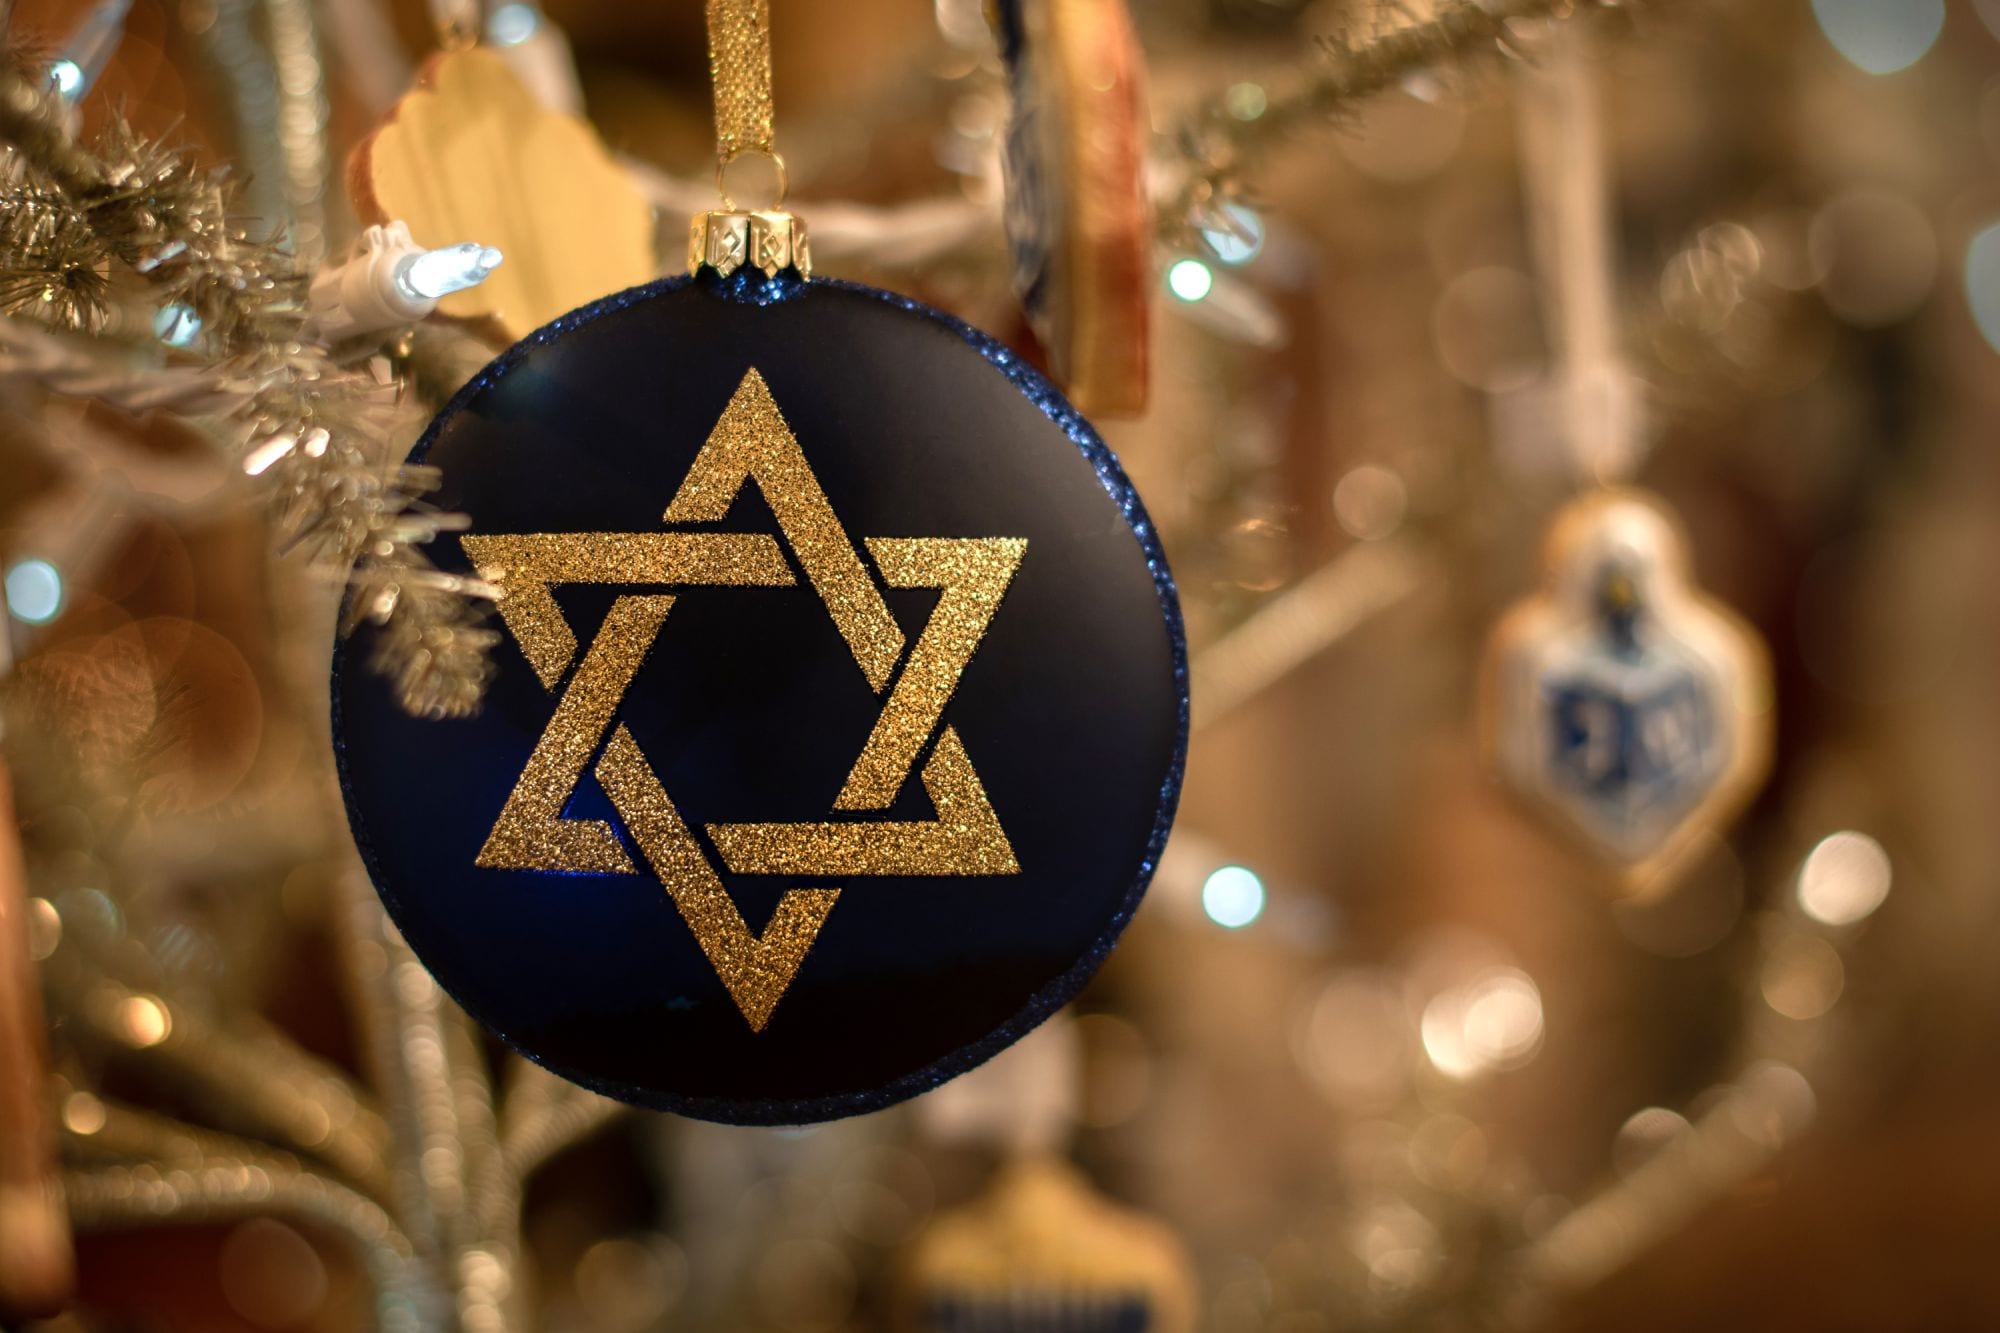 Jewish Star of David and dreidel decoration, nut free Hanukkah